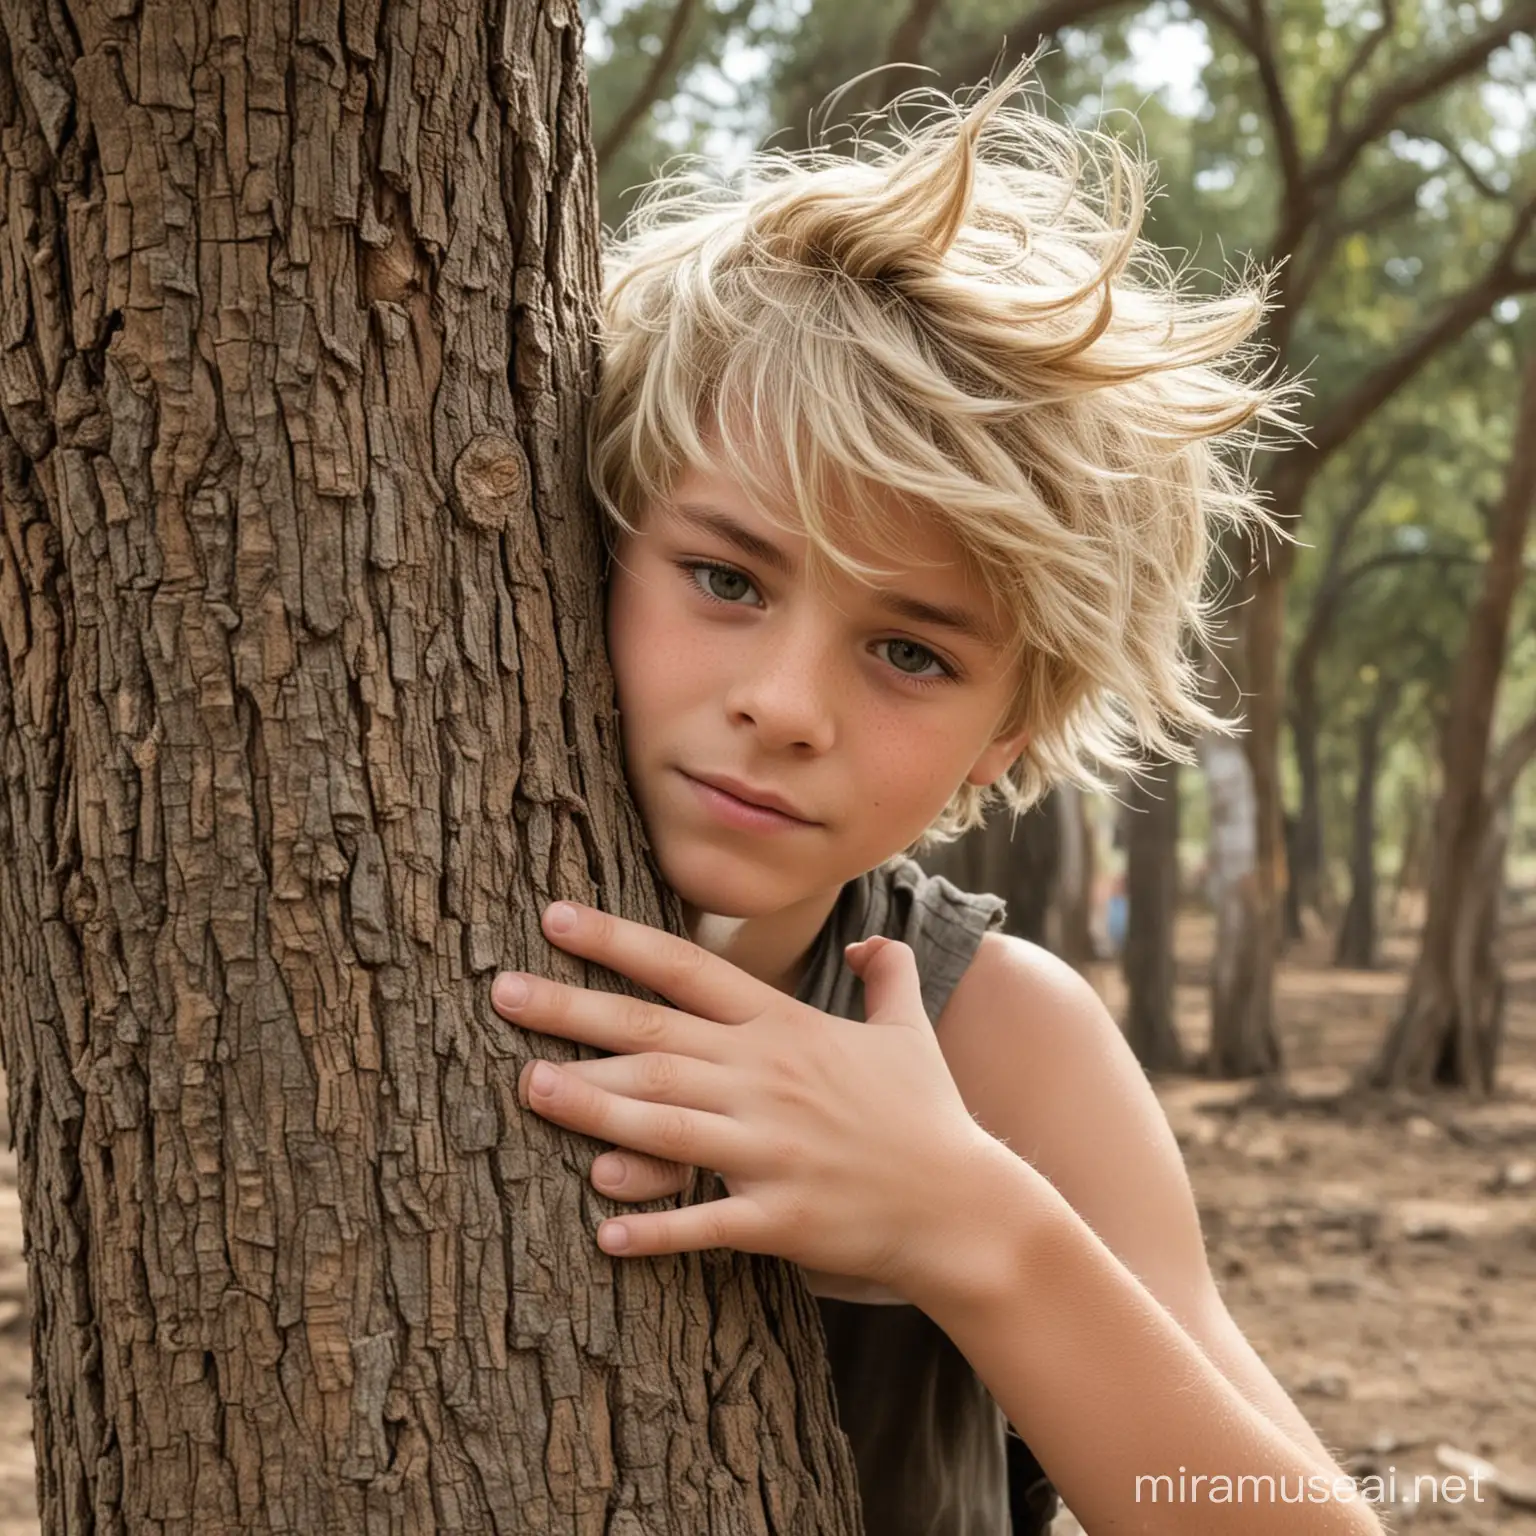 13YearOld Boy Embracing a Single Tree with Light Hair